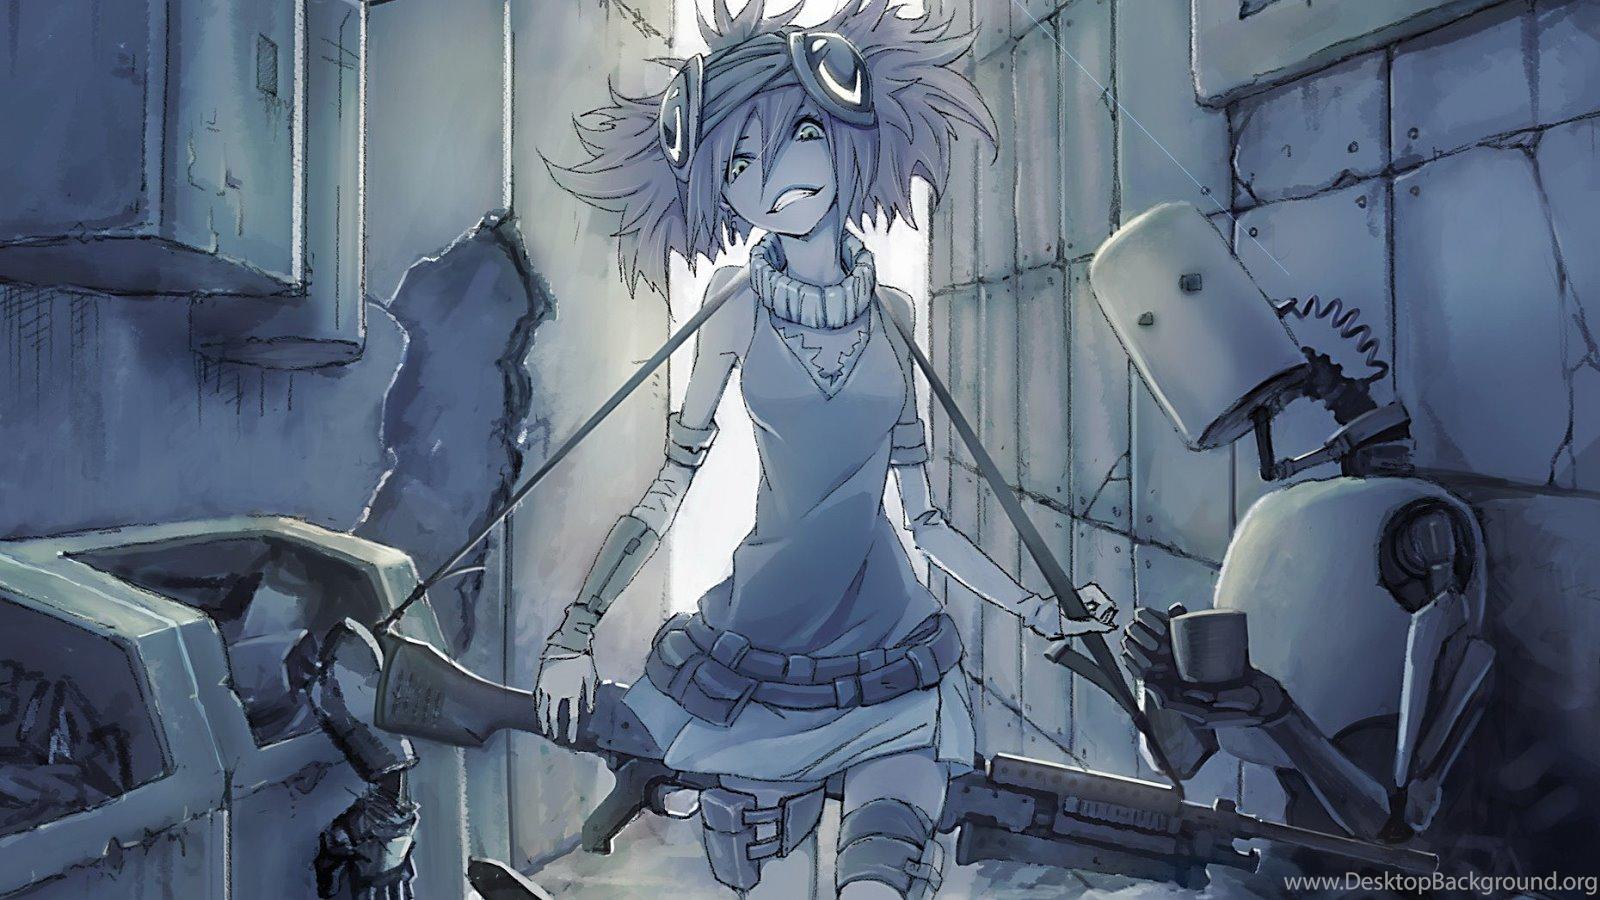 1600x900 Futuristic Anime Girl With Guns In A World Of Robots Wallpaper. Desktop Background on WallpaperBat